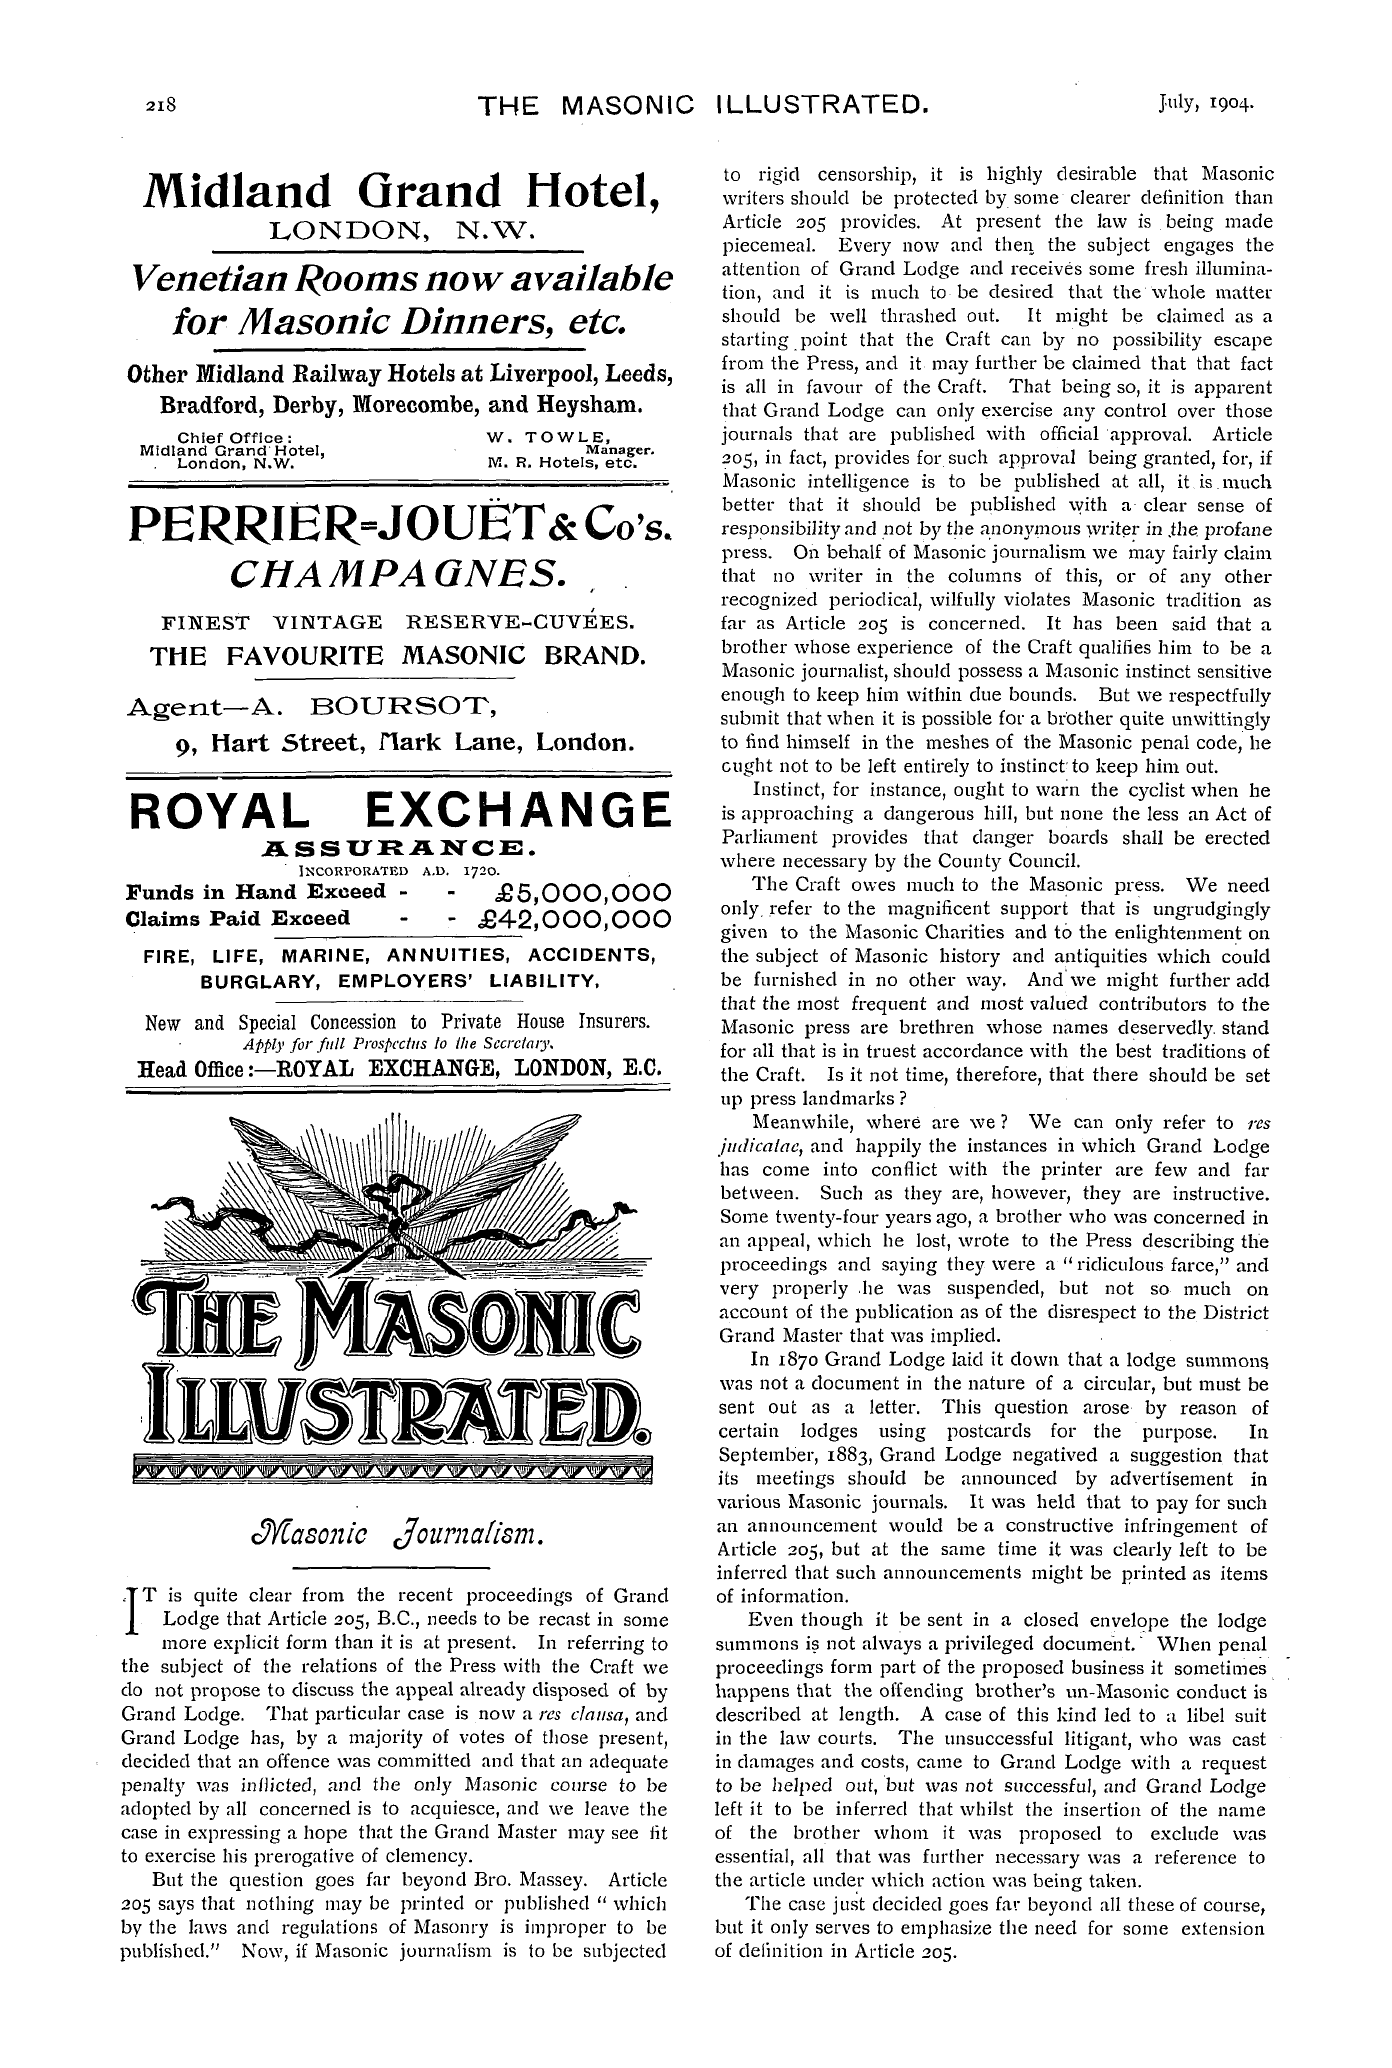 The Masonic Illustrated: 1904-07-01 - Ad01201